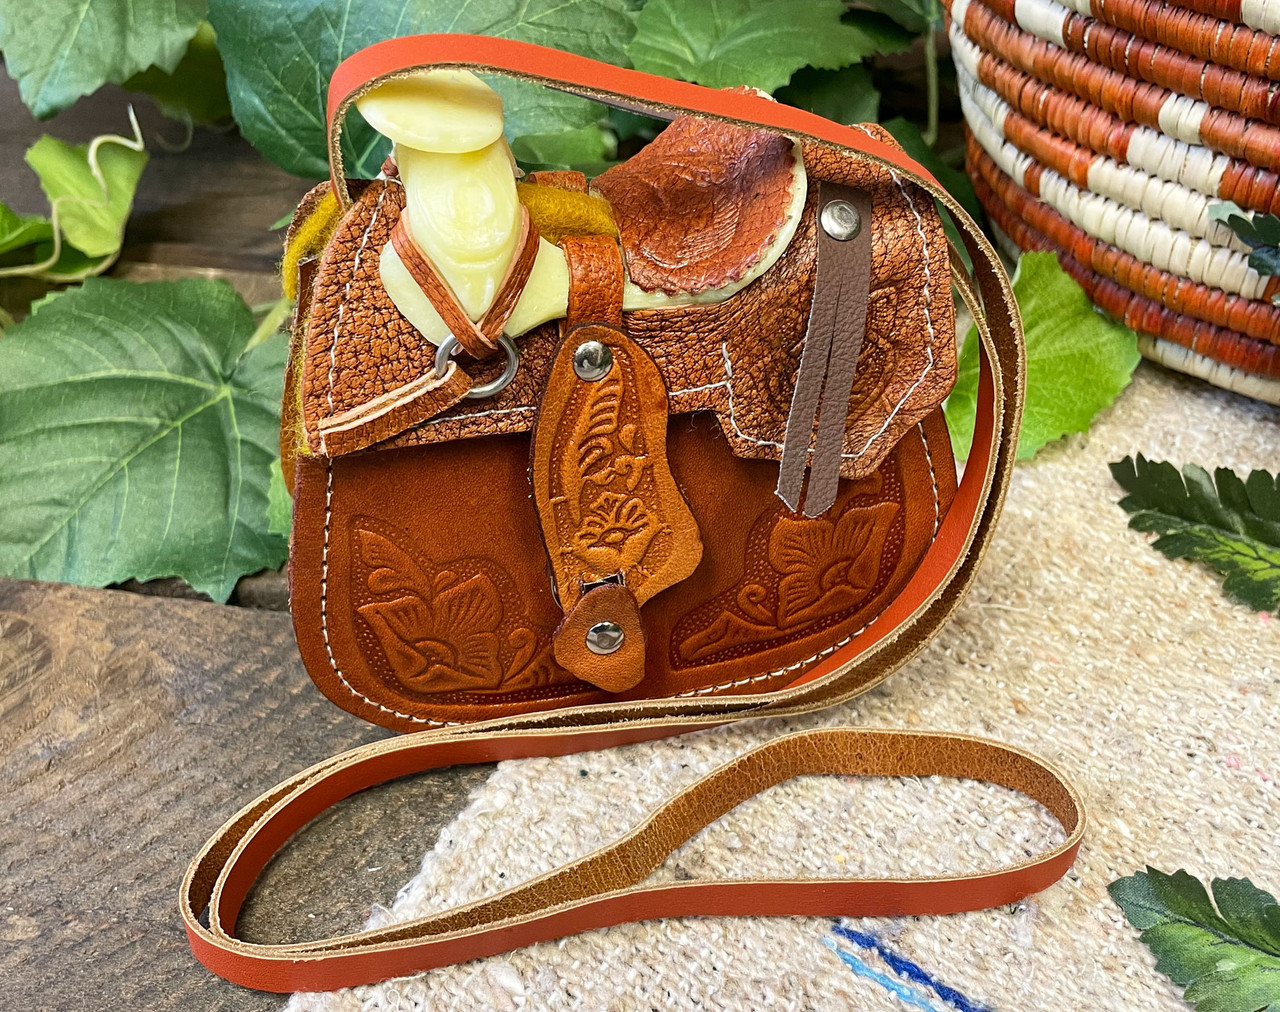 Brown Handbags, Purses & Wallets for Women | Nordstrom